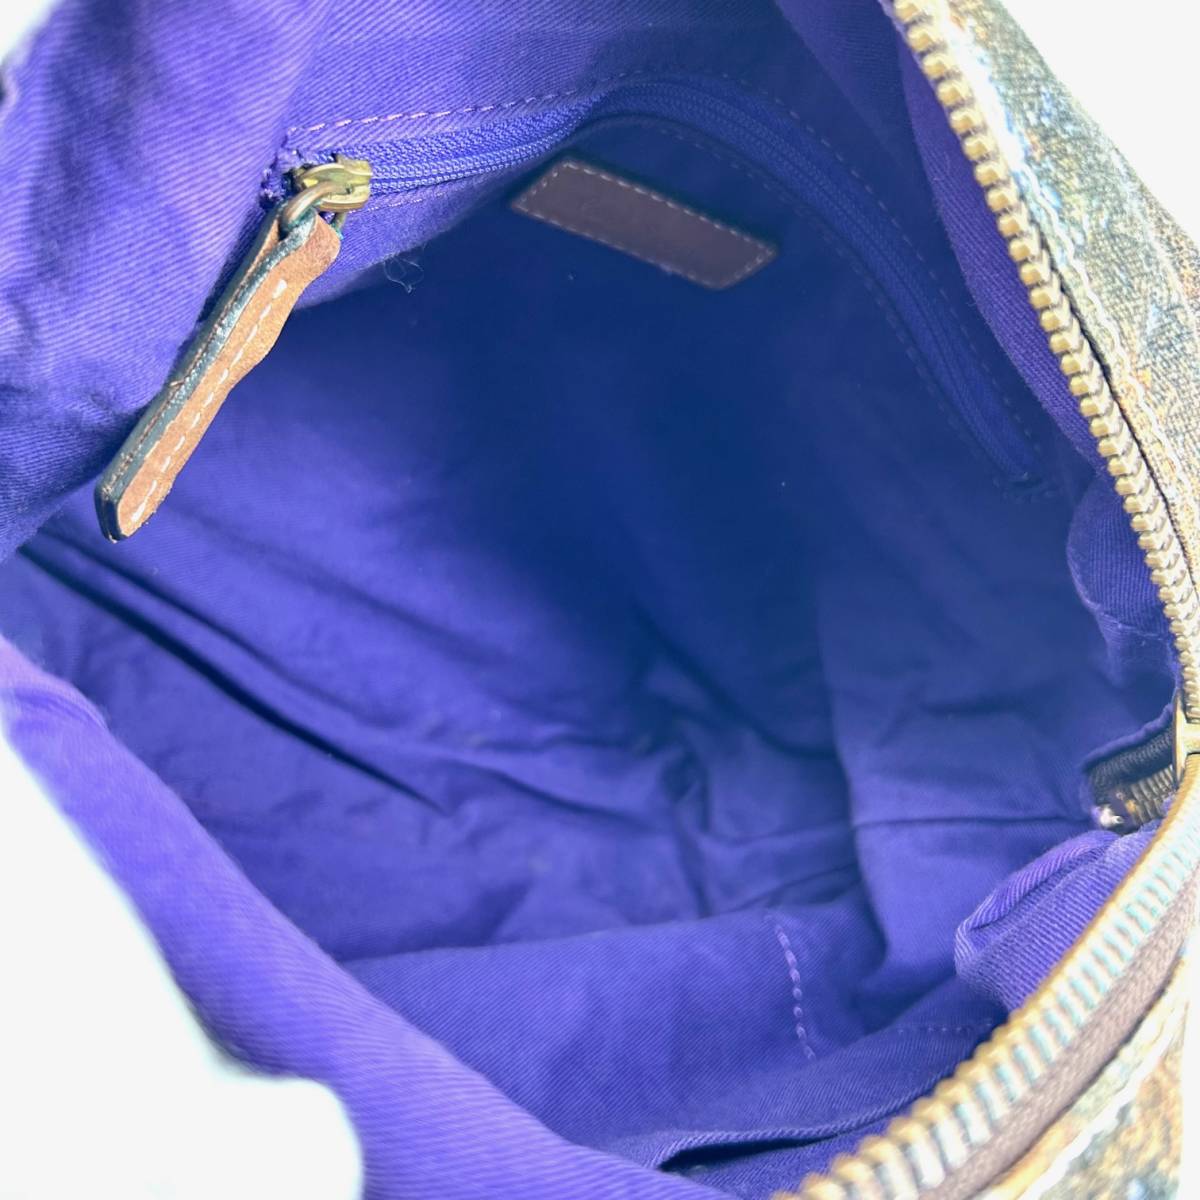 Paul Smith Paul Smith Mini Cooper сумка на плечо транскрипция принт сумка портфель сумка Англия машина кожа парусина мульти- полоса 